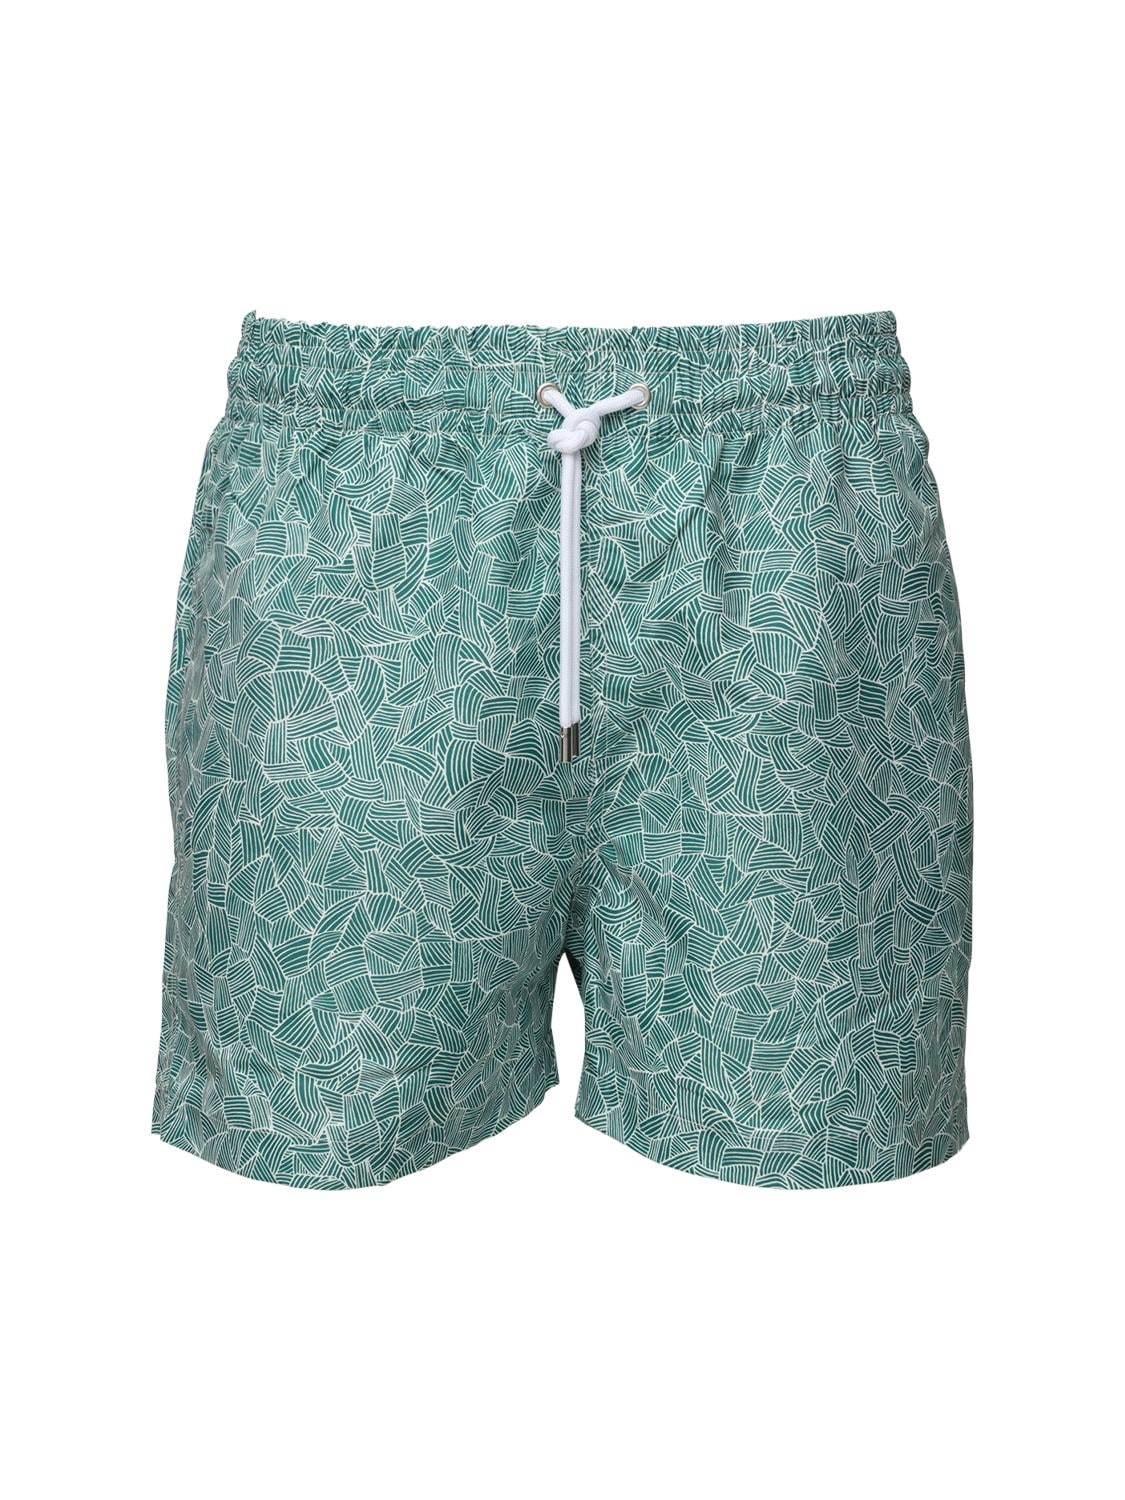 Apnee Printed Regenerated Nylon Swim Shorts In Green